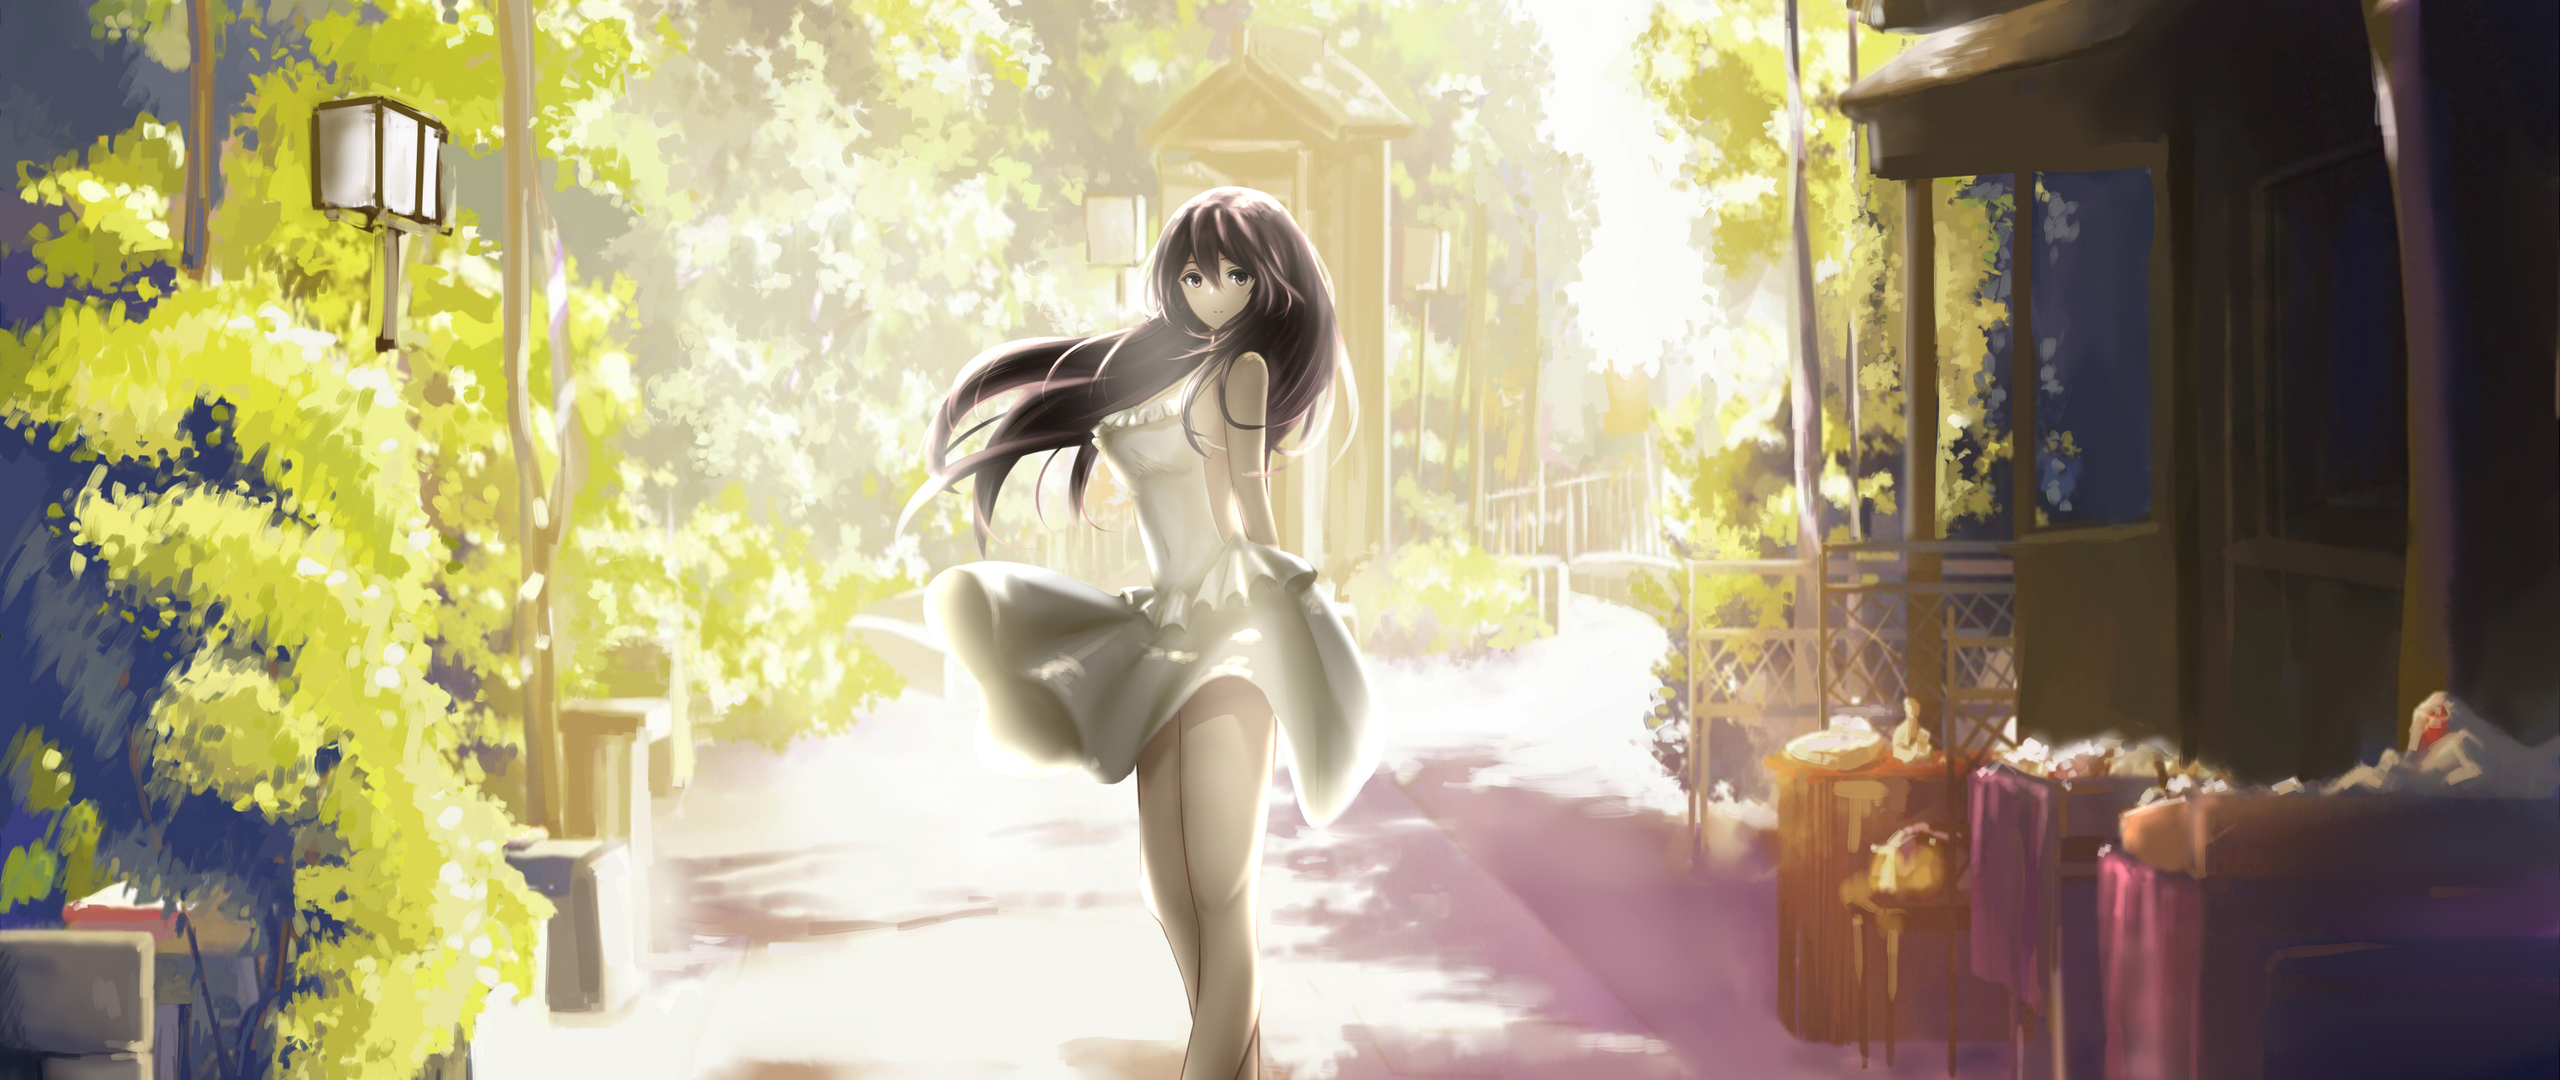 2560x1080 Anime Girl In Beautiful Dress Outdoors 4k 2560x1080